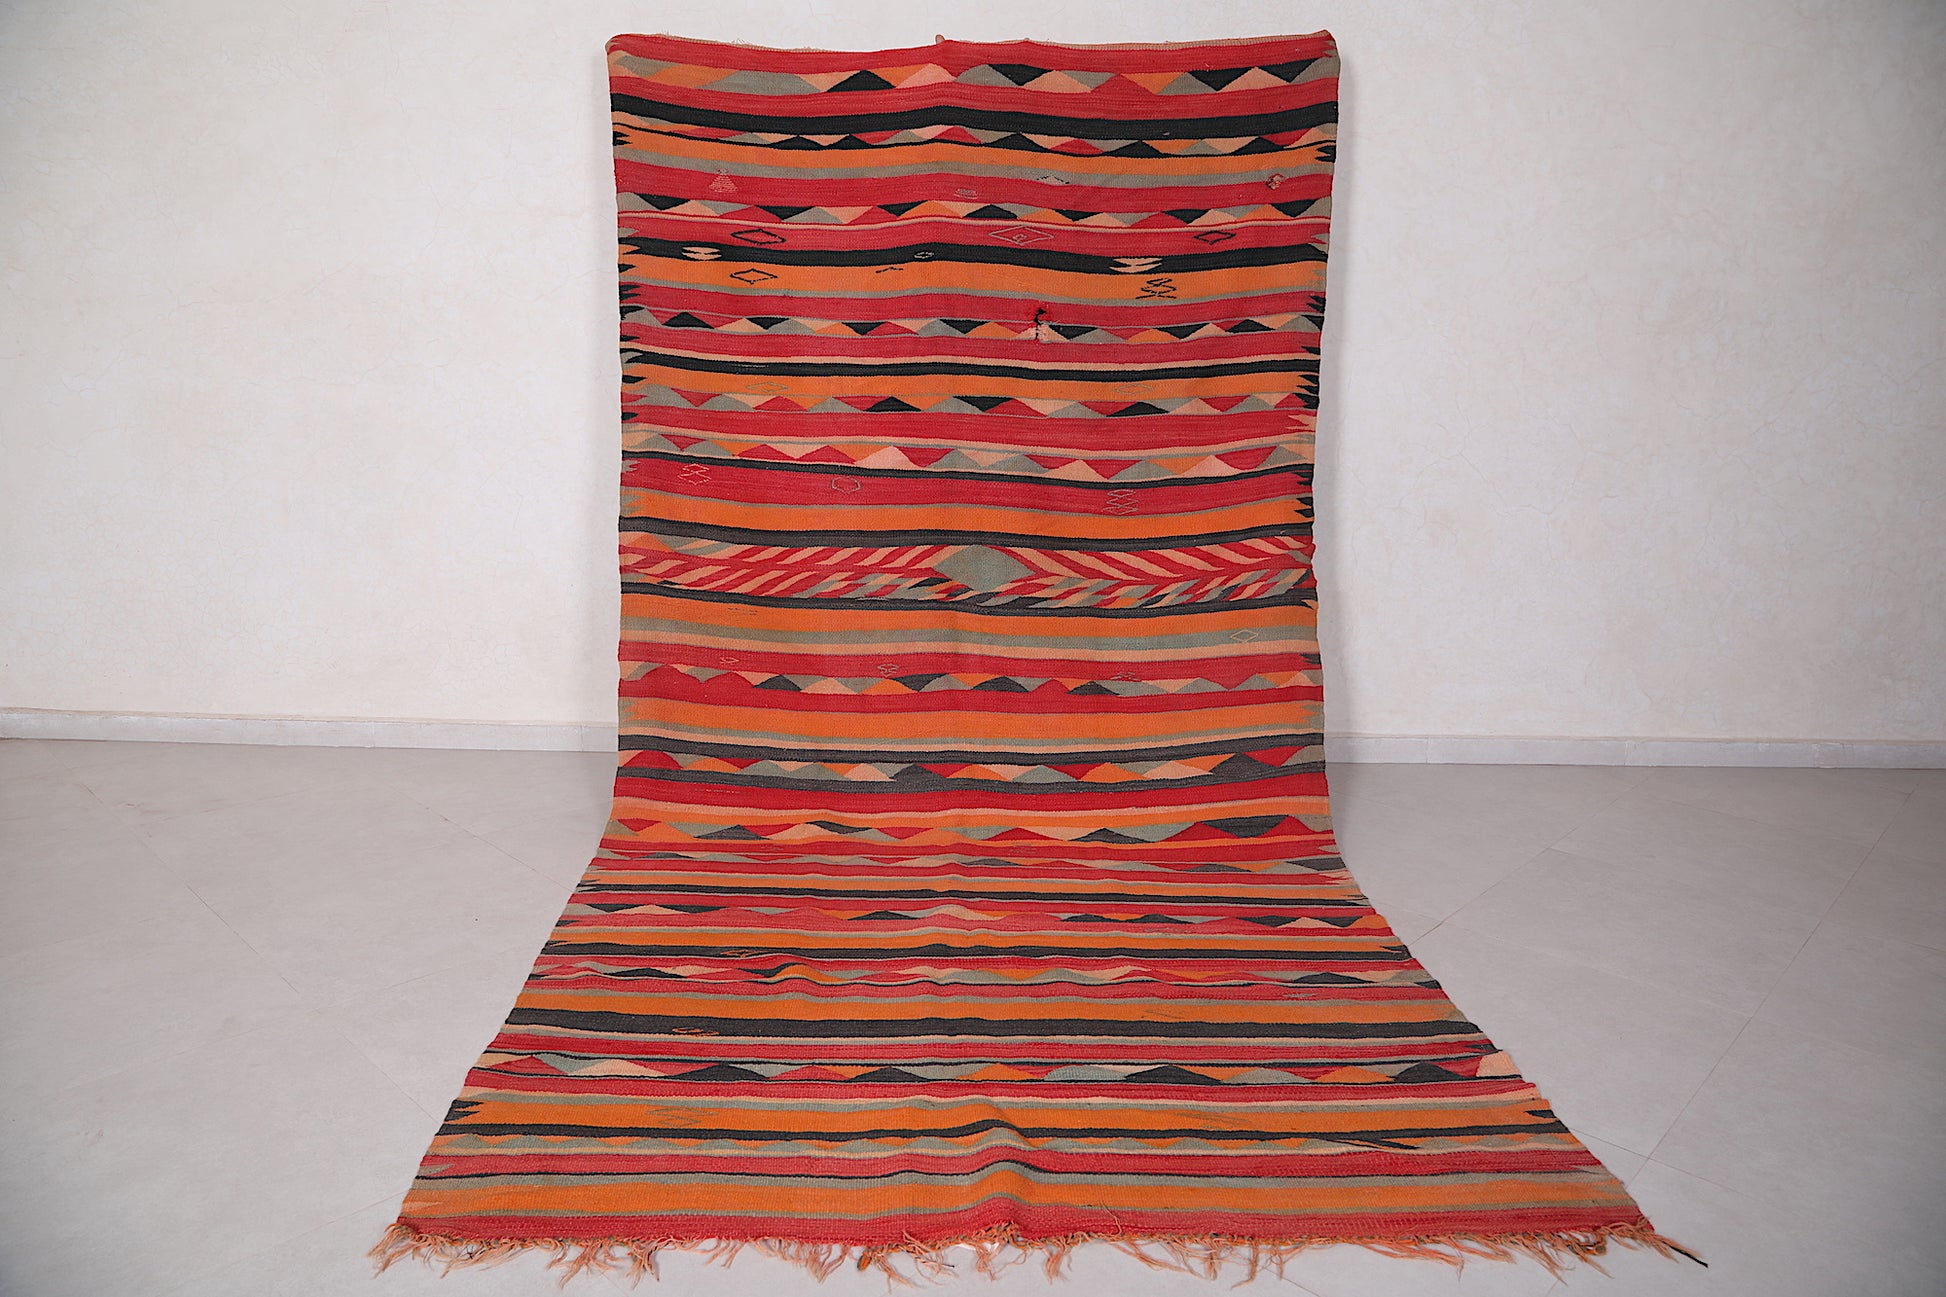 Vintage Berber Kilim 5.5 X 10.9 Feet